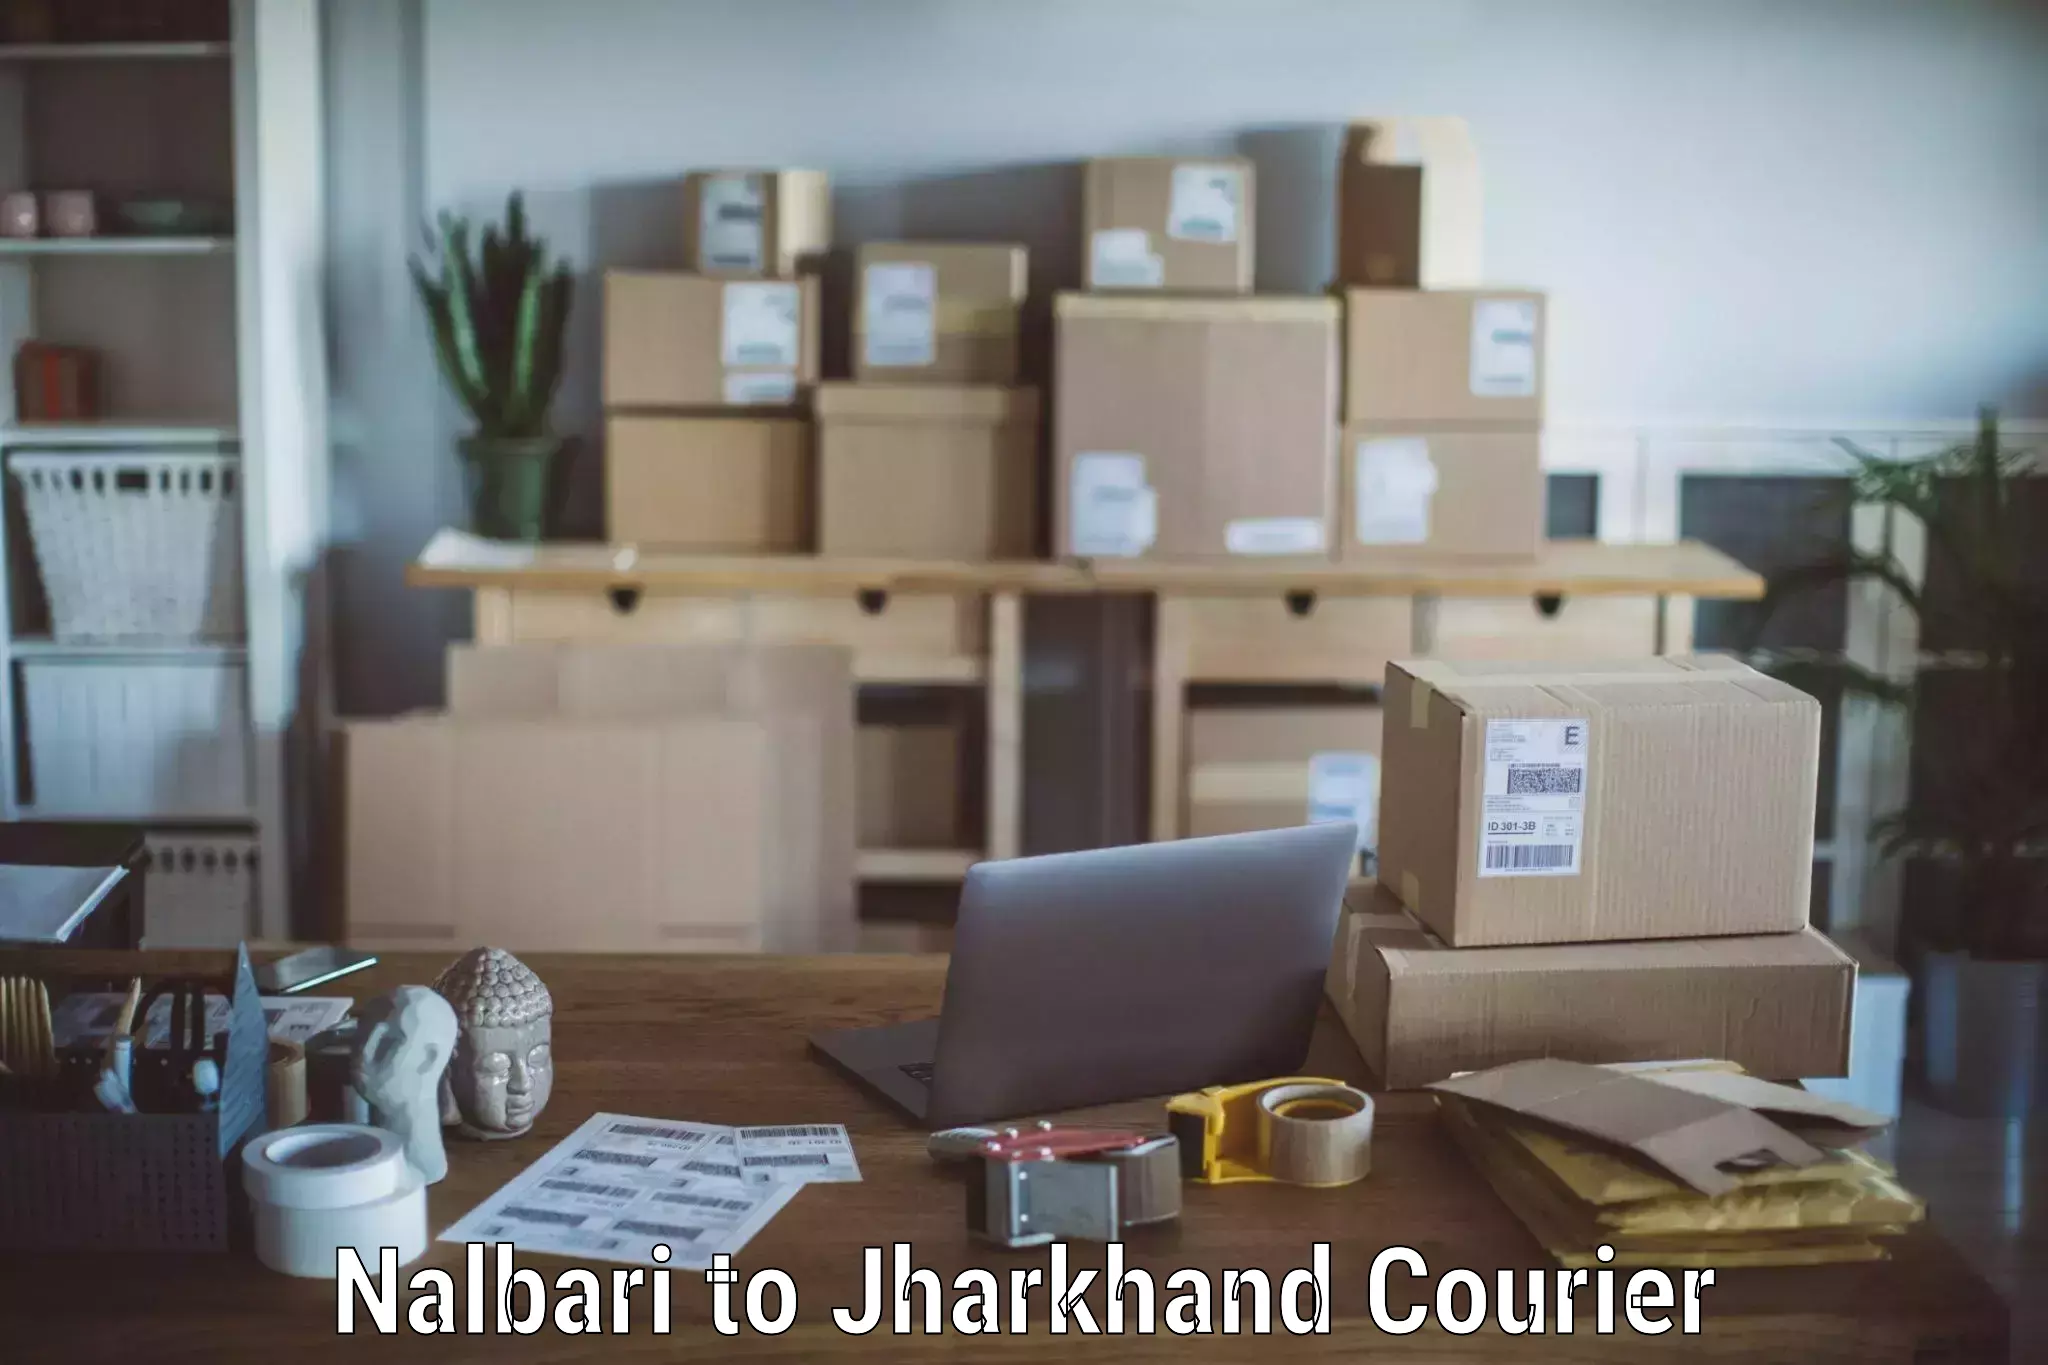 Reliable moving assistance Nalbari to Dhanbad